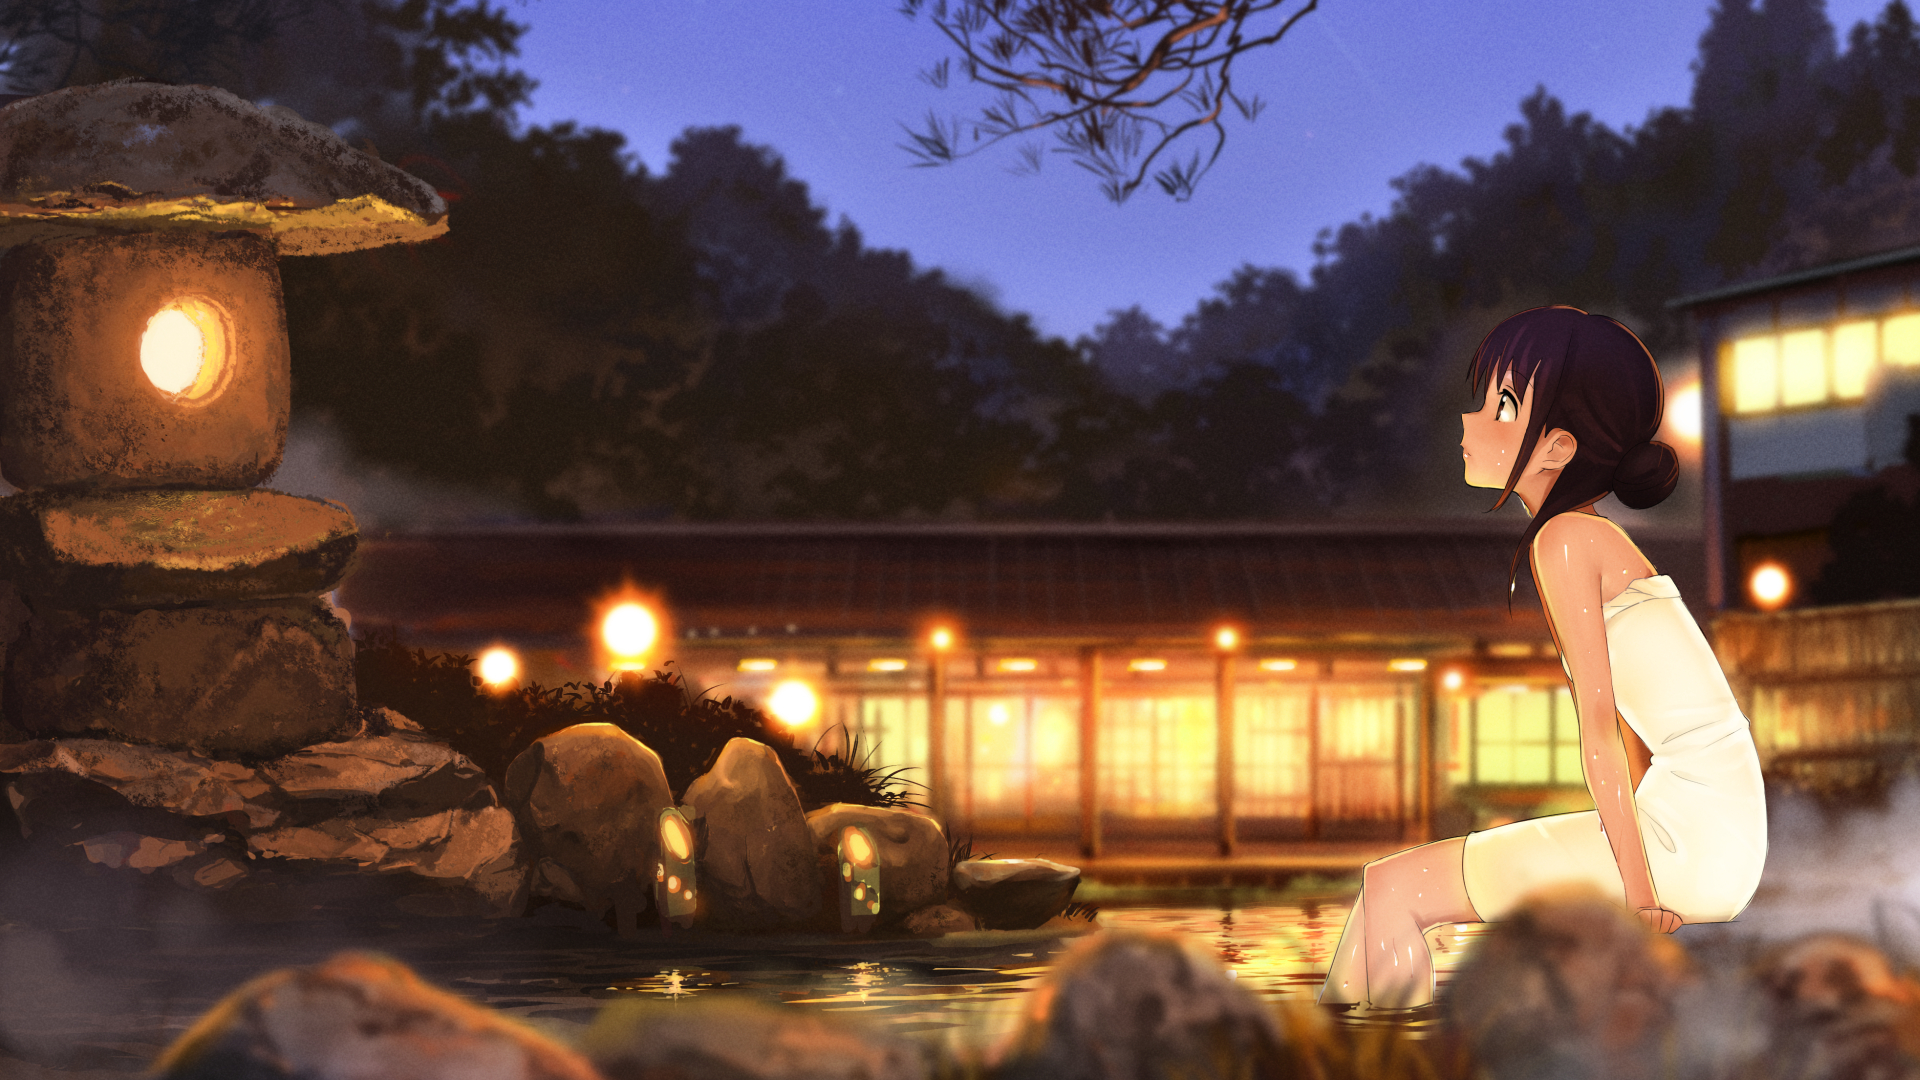 Anime Girls Hot Spring Water Lights House Outdoors Wallpaper:1920x1080